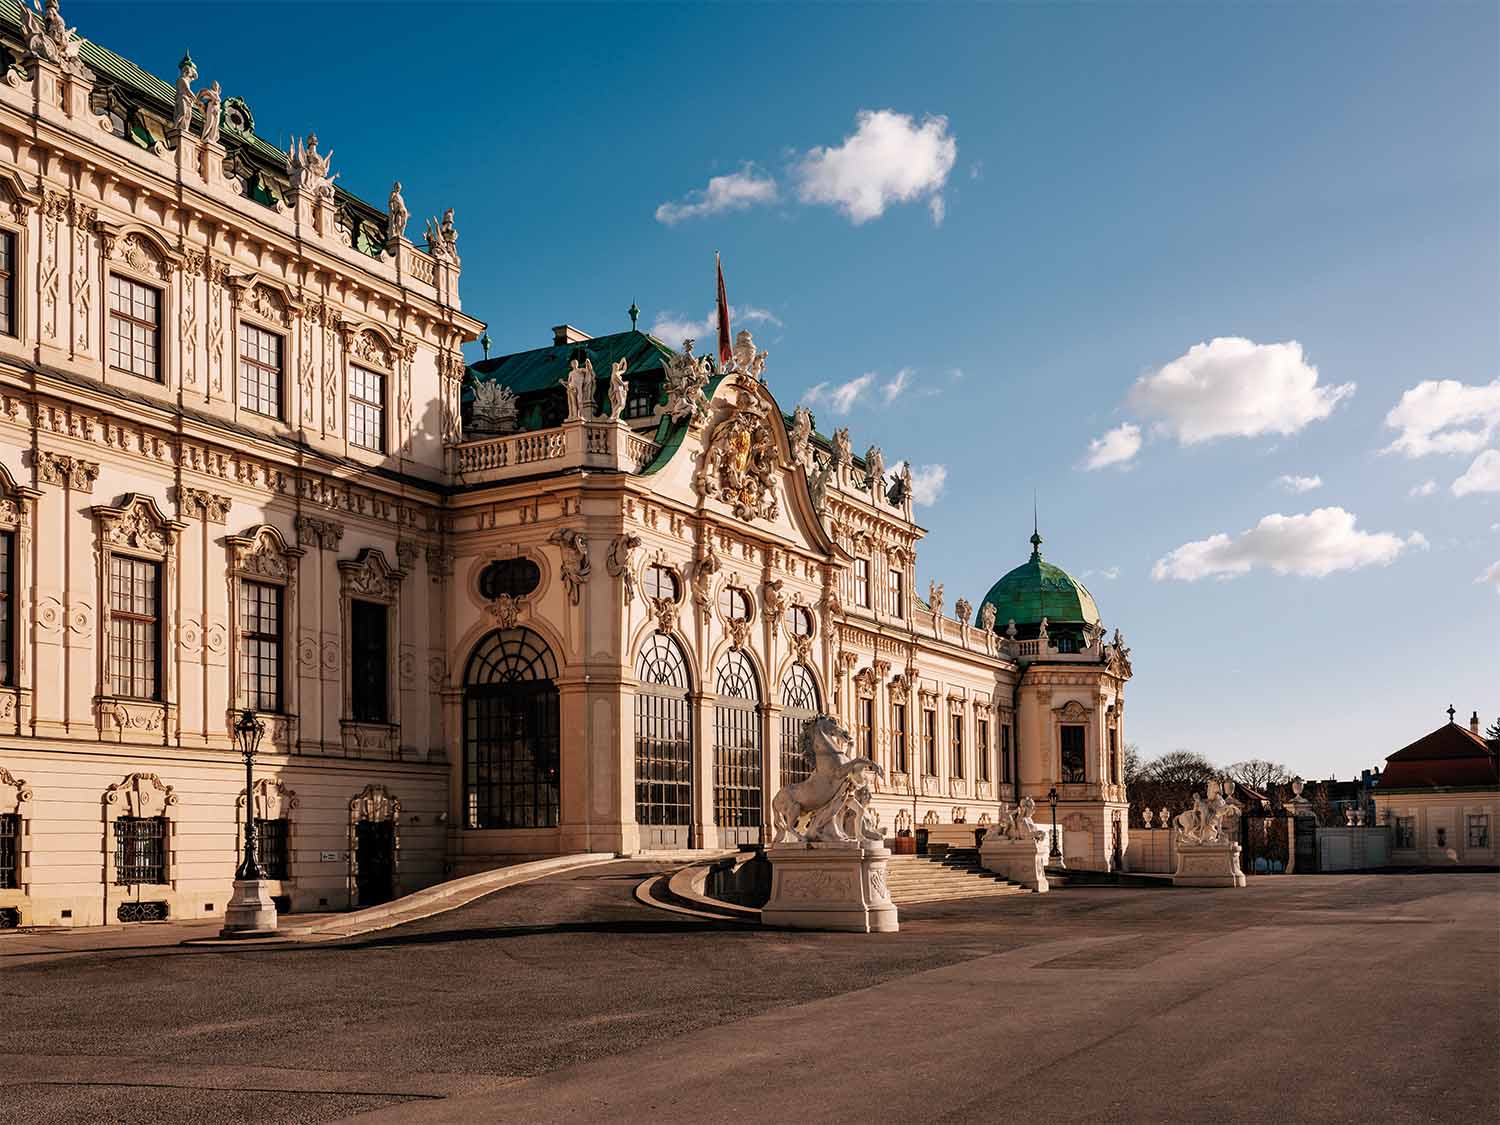 The Leo Grand Hotel Vienna